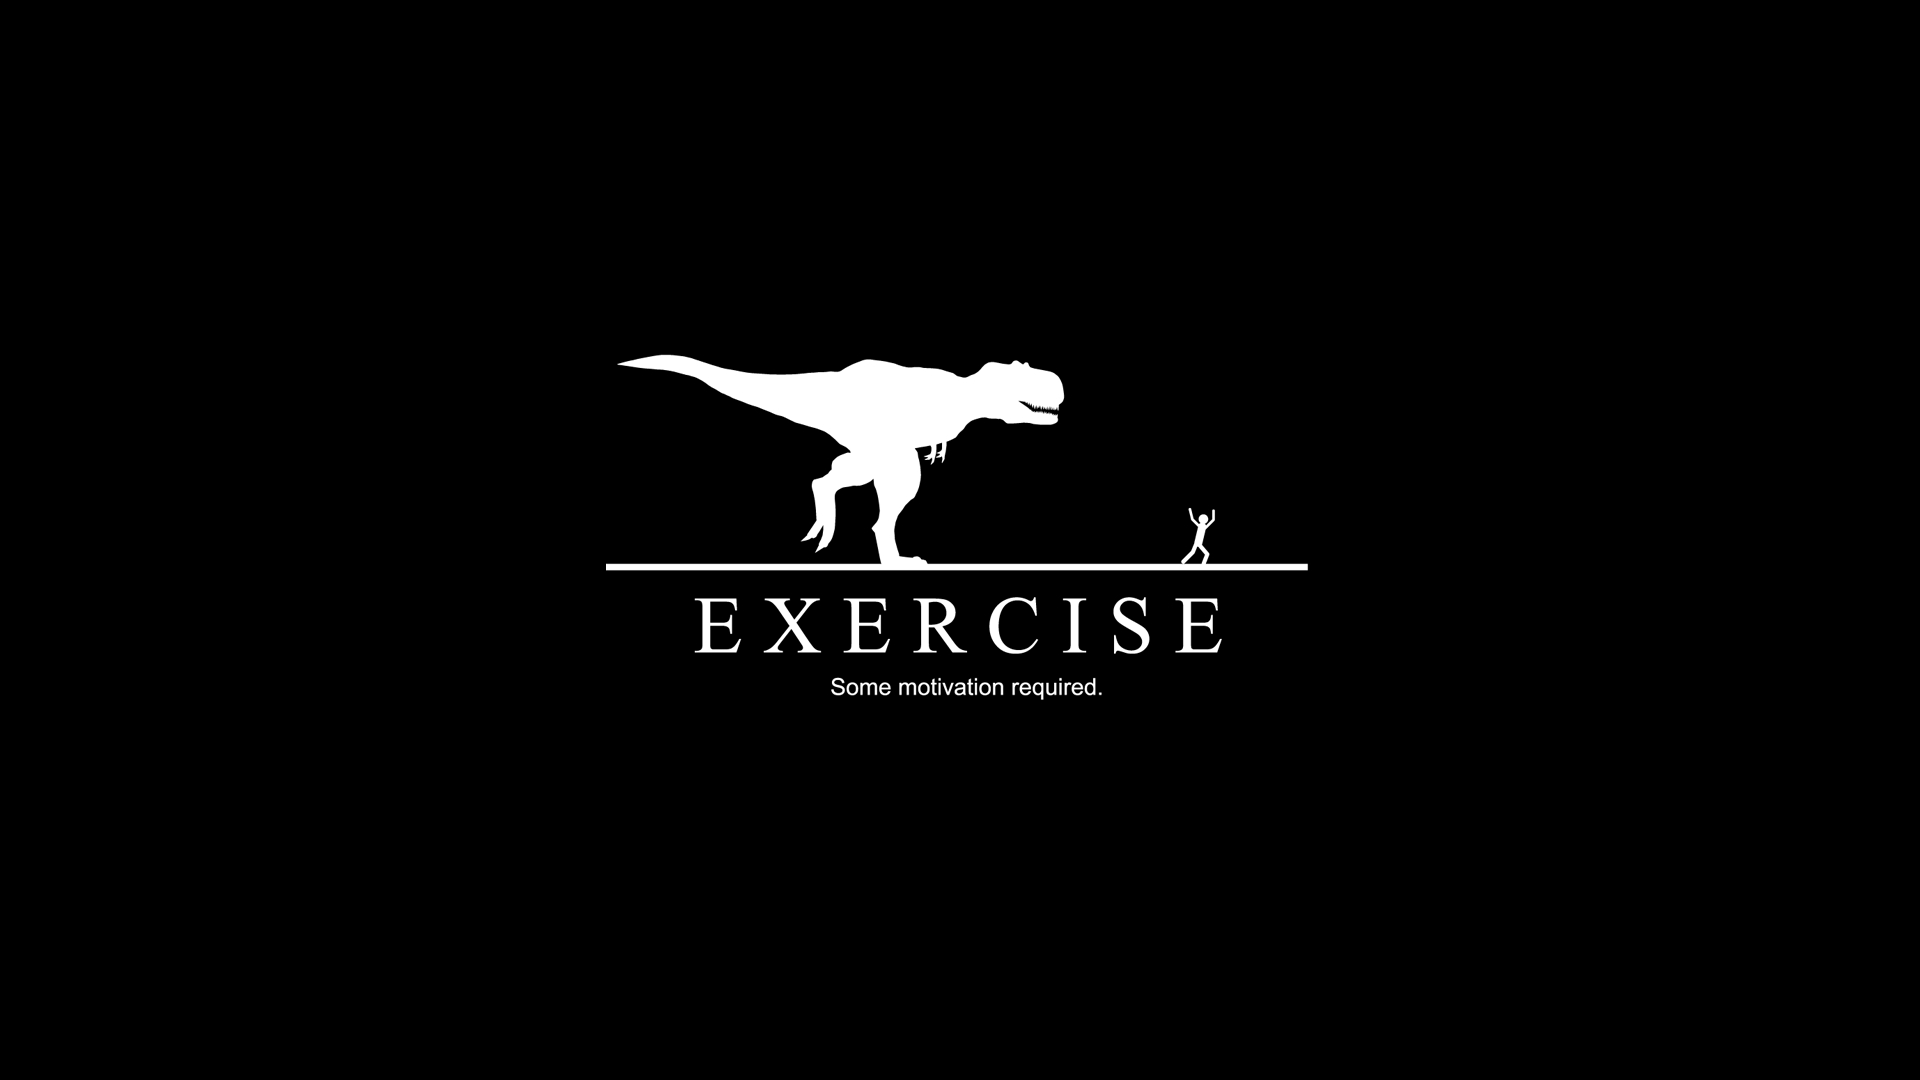 text dinosaurs exercises tyrannosaurus rex stick figures run motivational posters black background